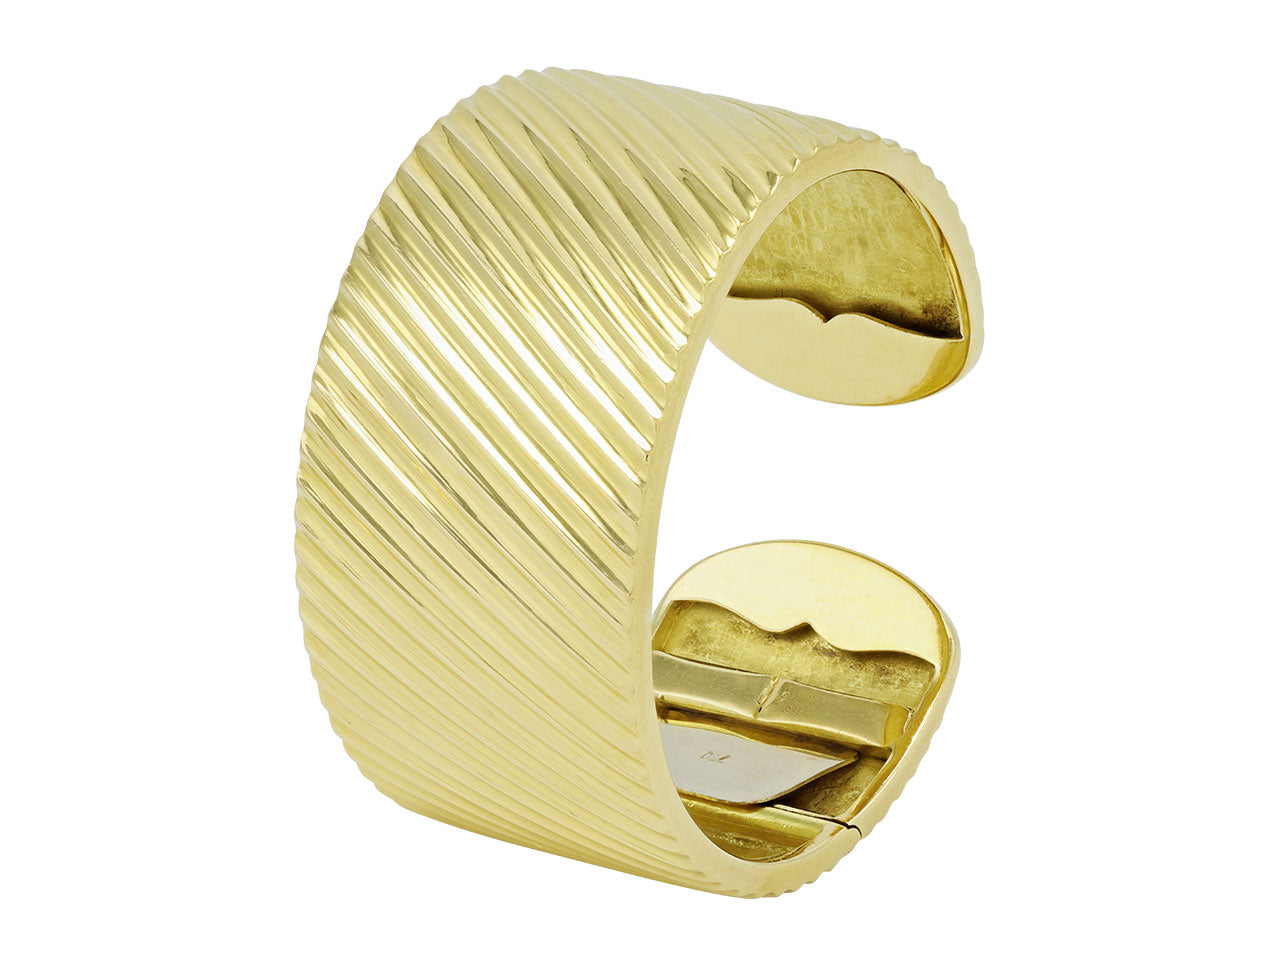 Textured Bangle Bracelet in 18K Gold